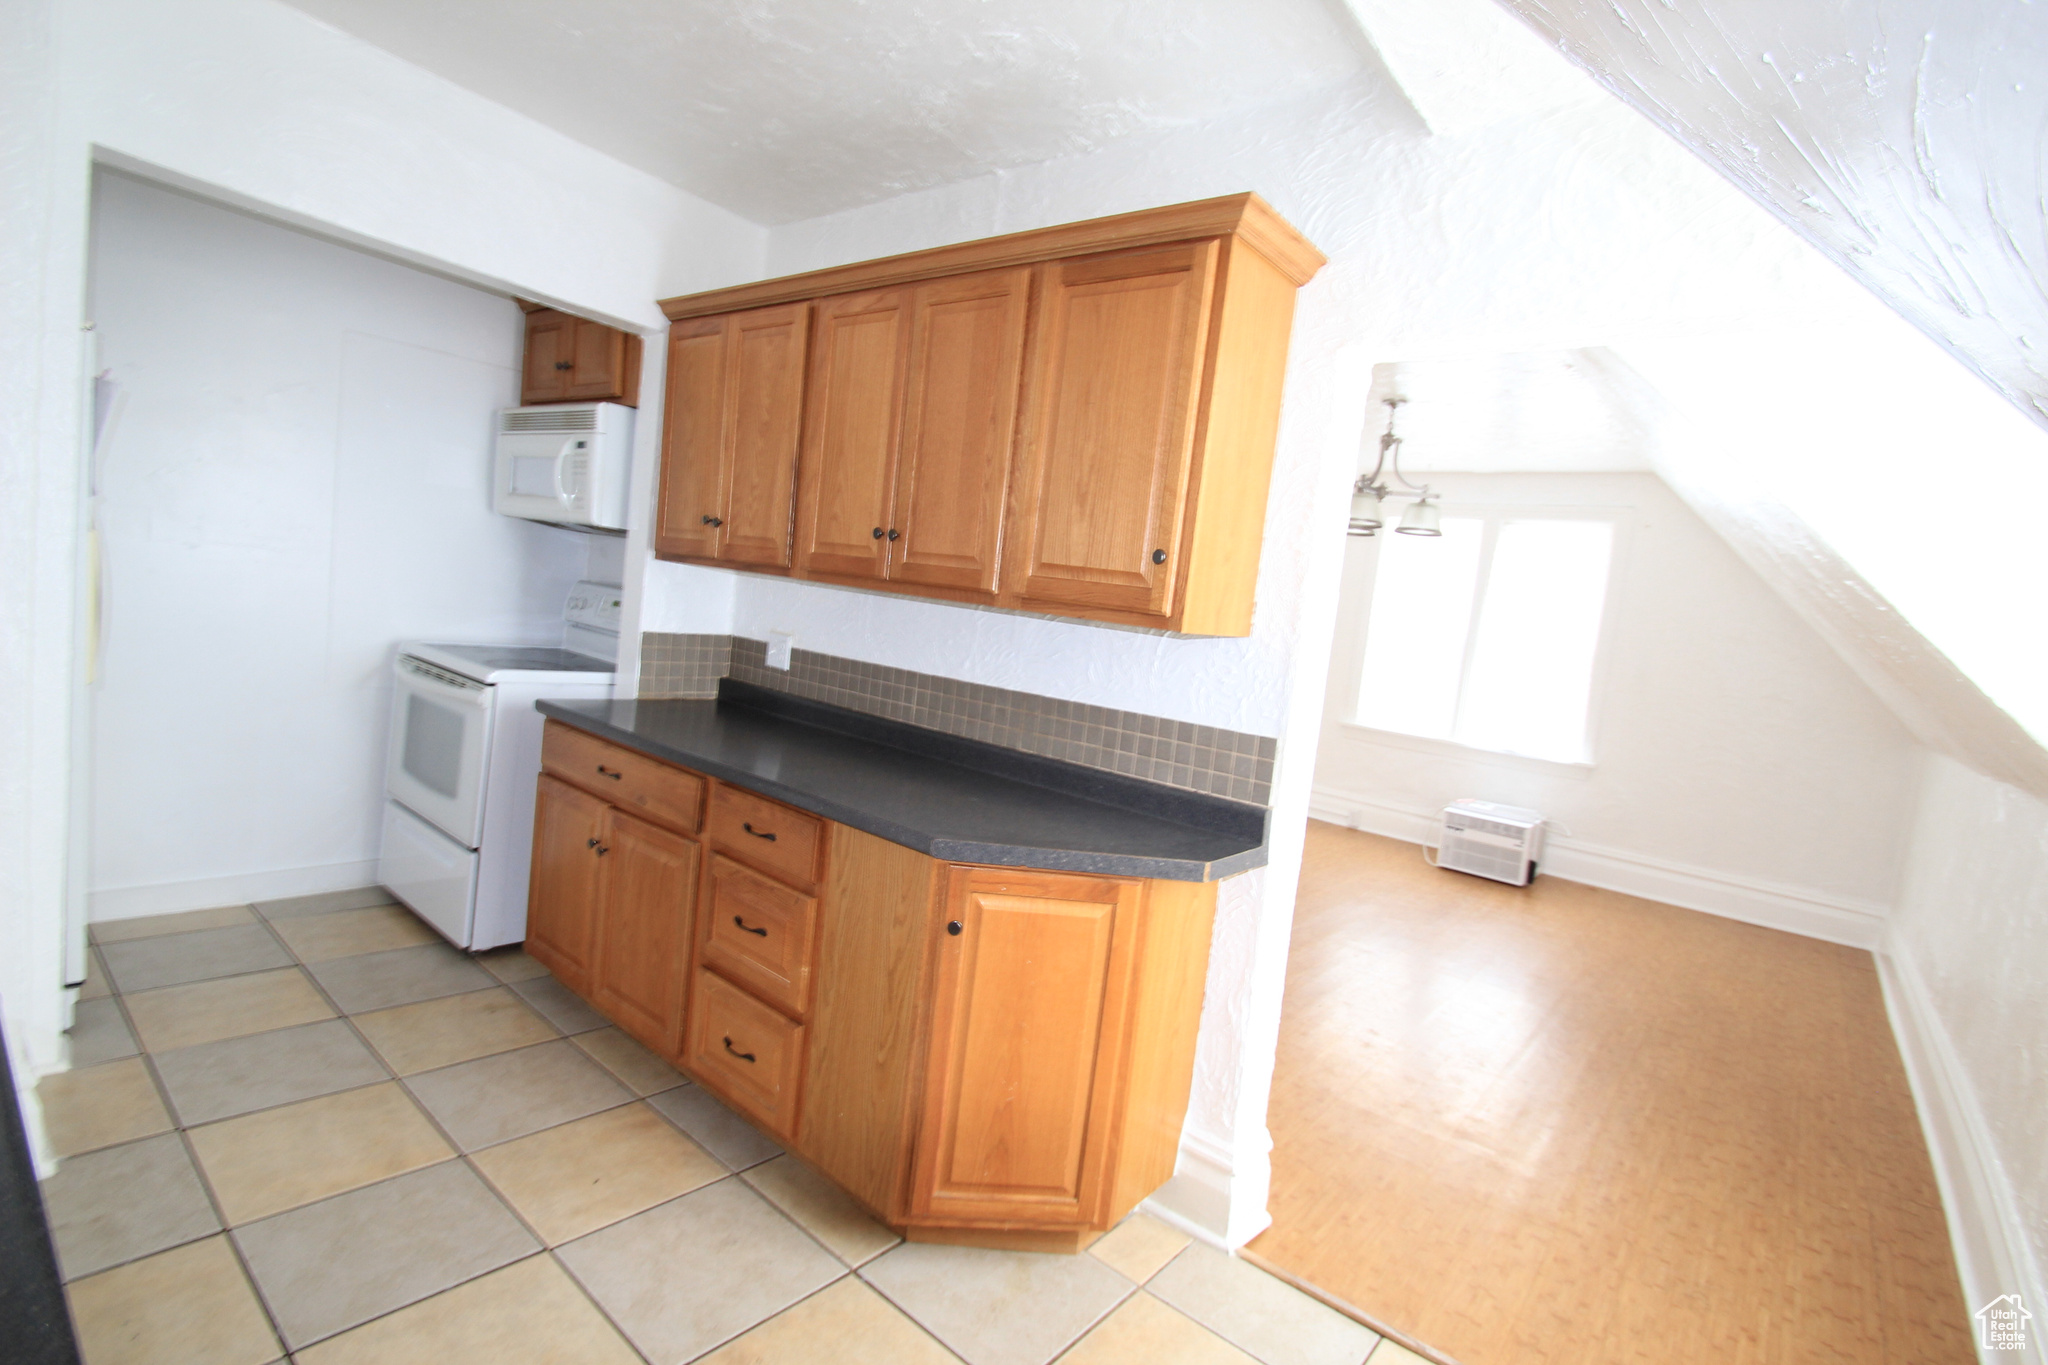 Kitchen with backsplash, white appliances, vaulted ceiling, and light tile flooring